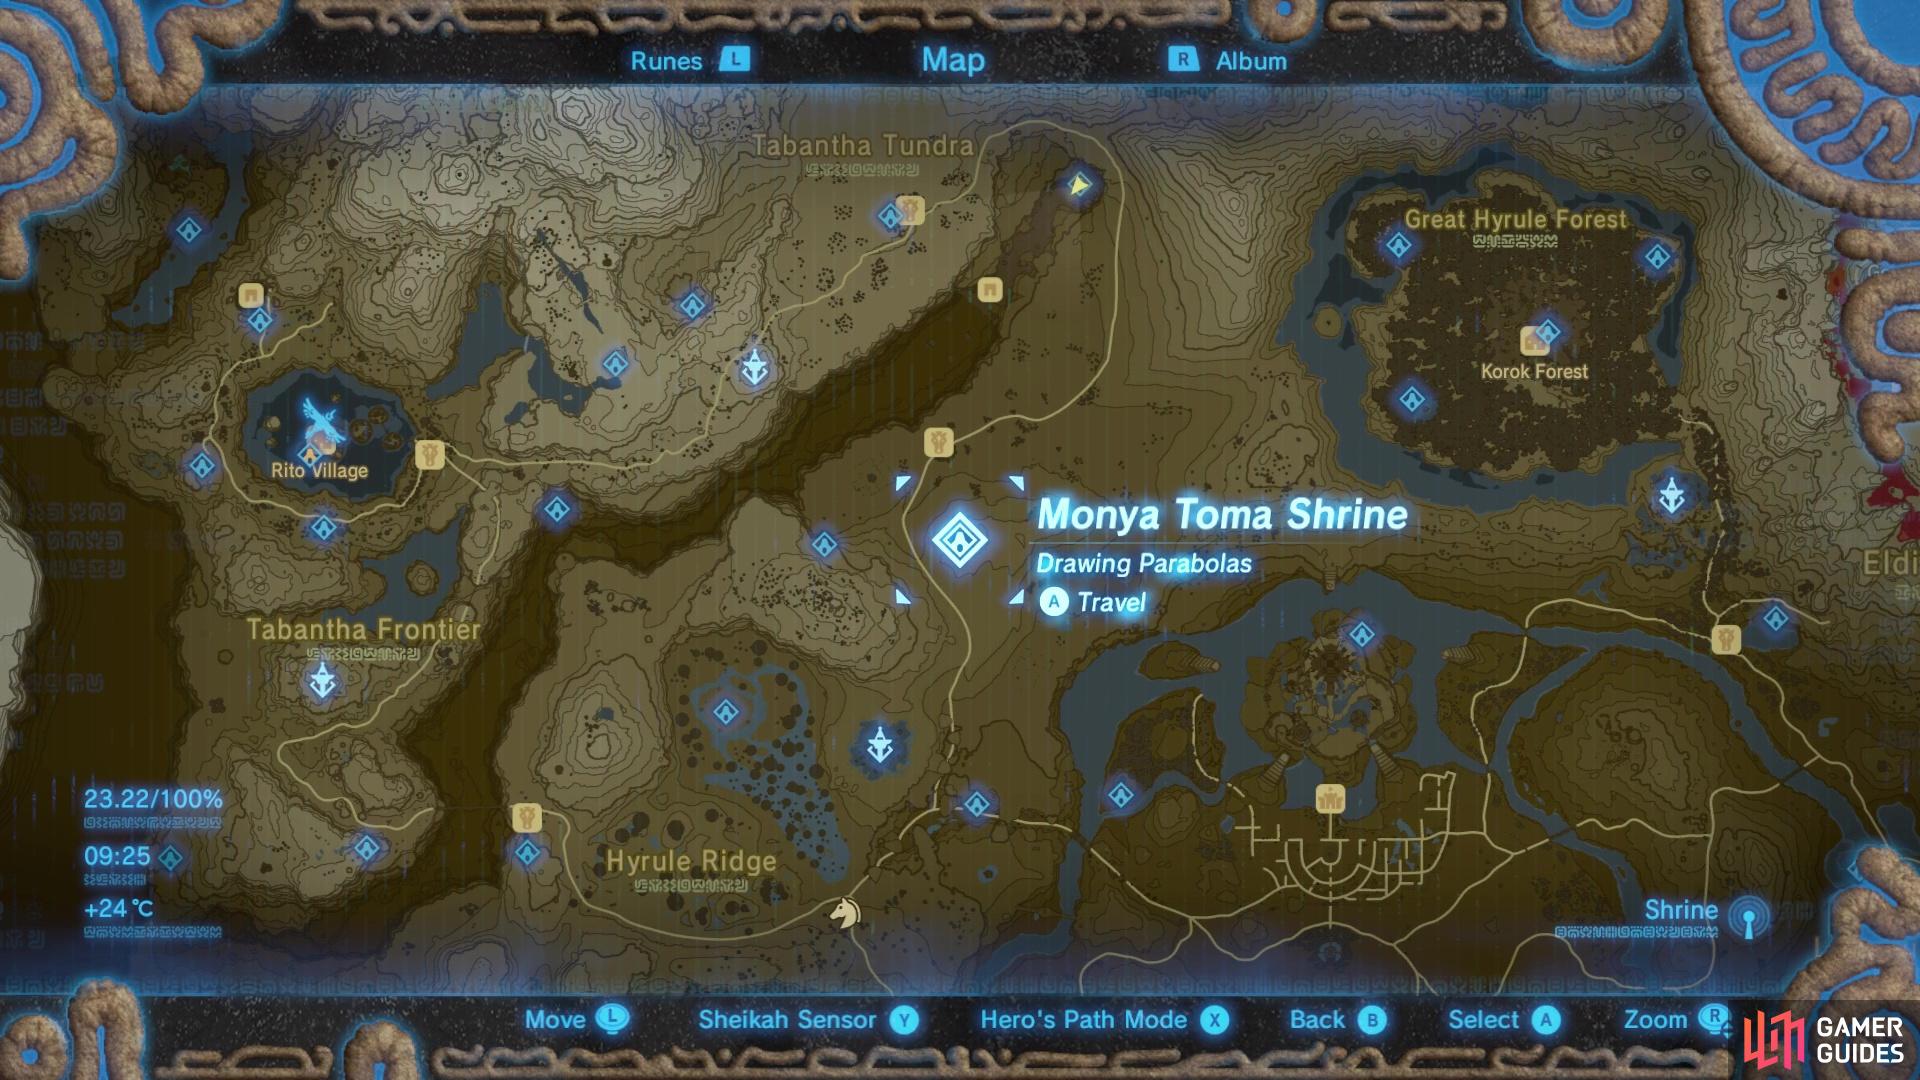 Monya Toma Shrine is found near Serenne Stables